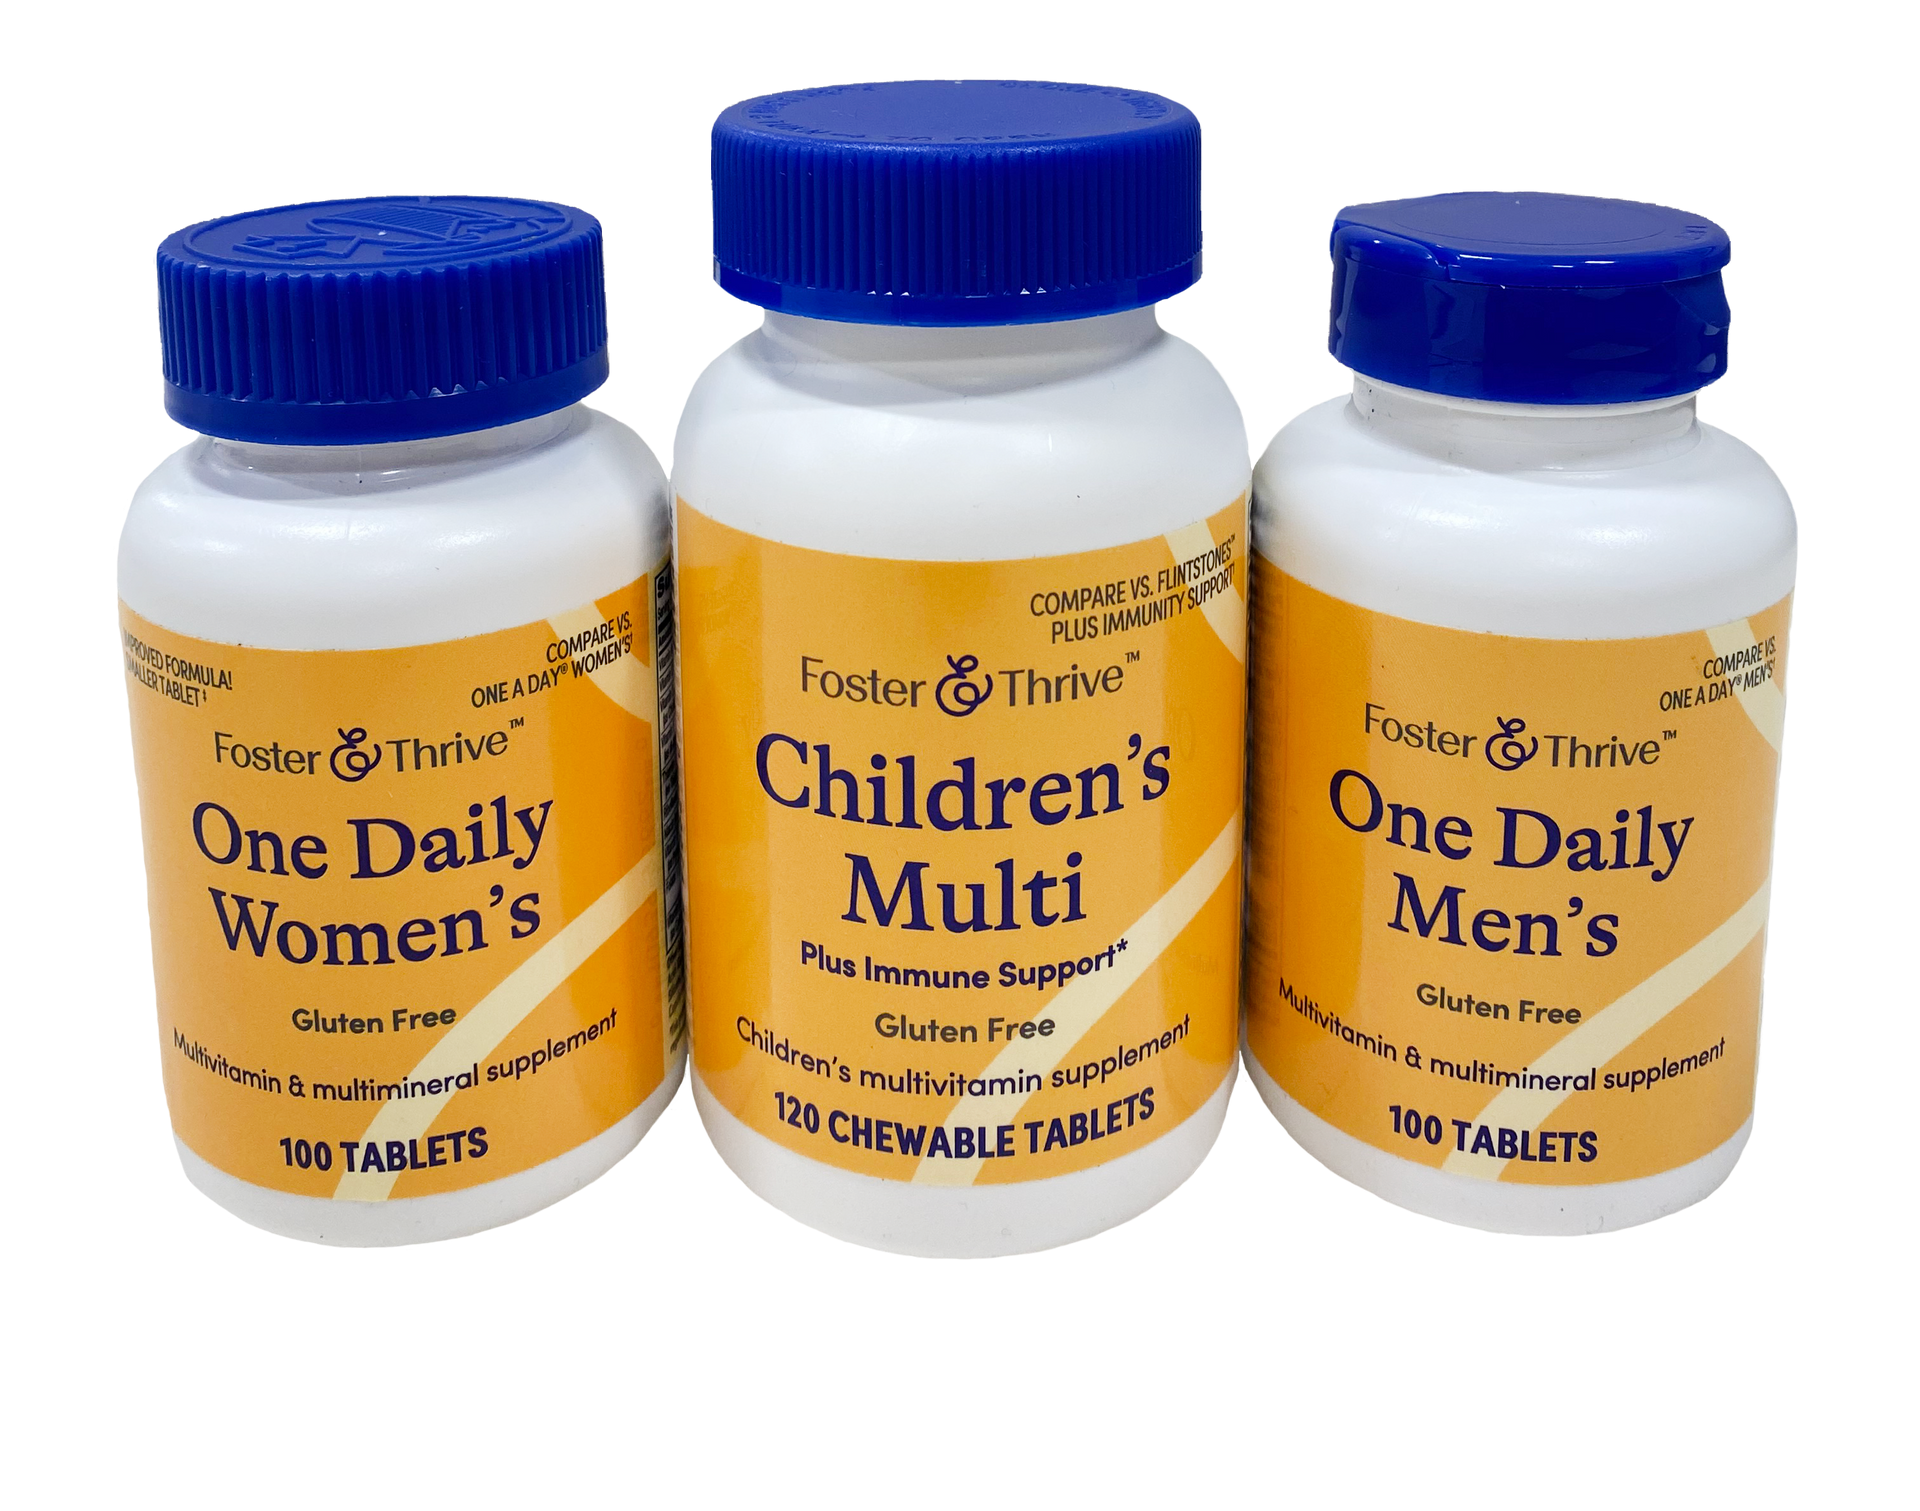 Three bottles of one daily women 's children 's multi vitamins